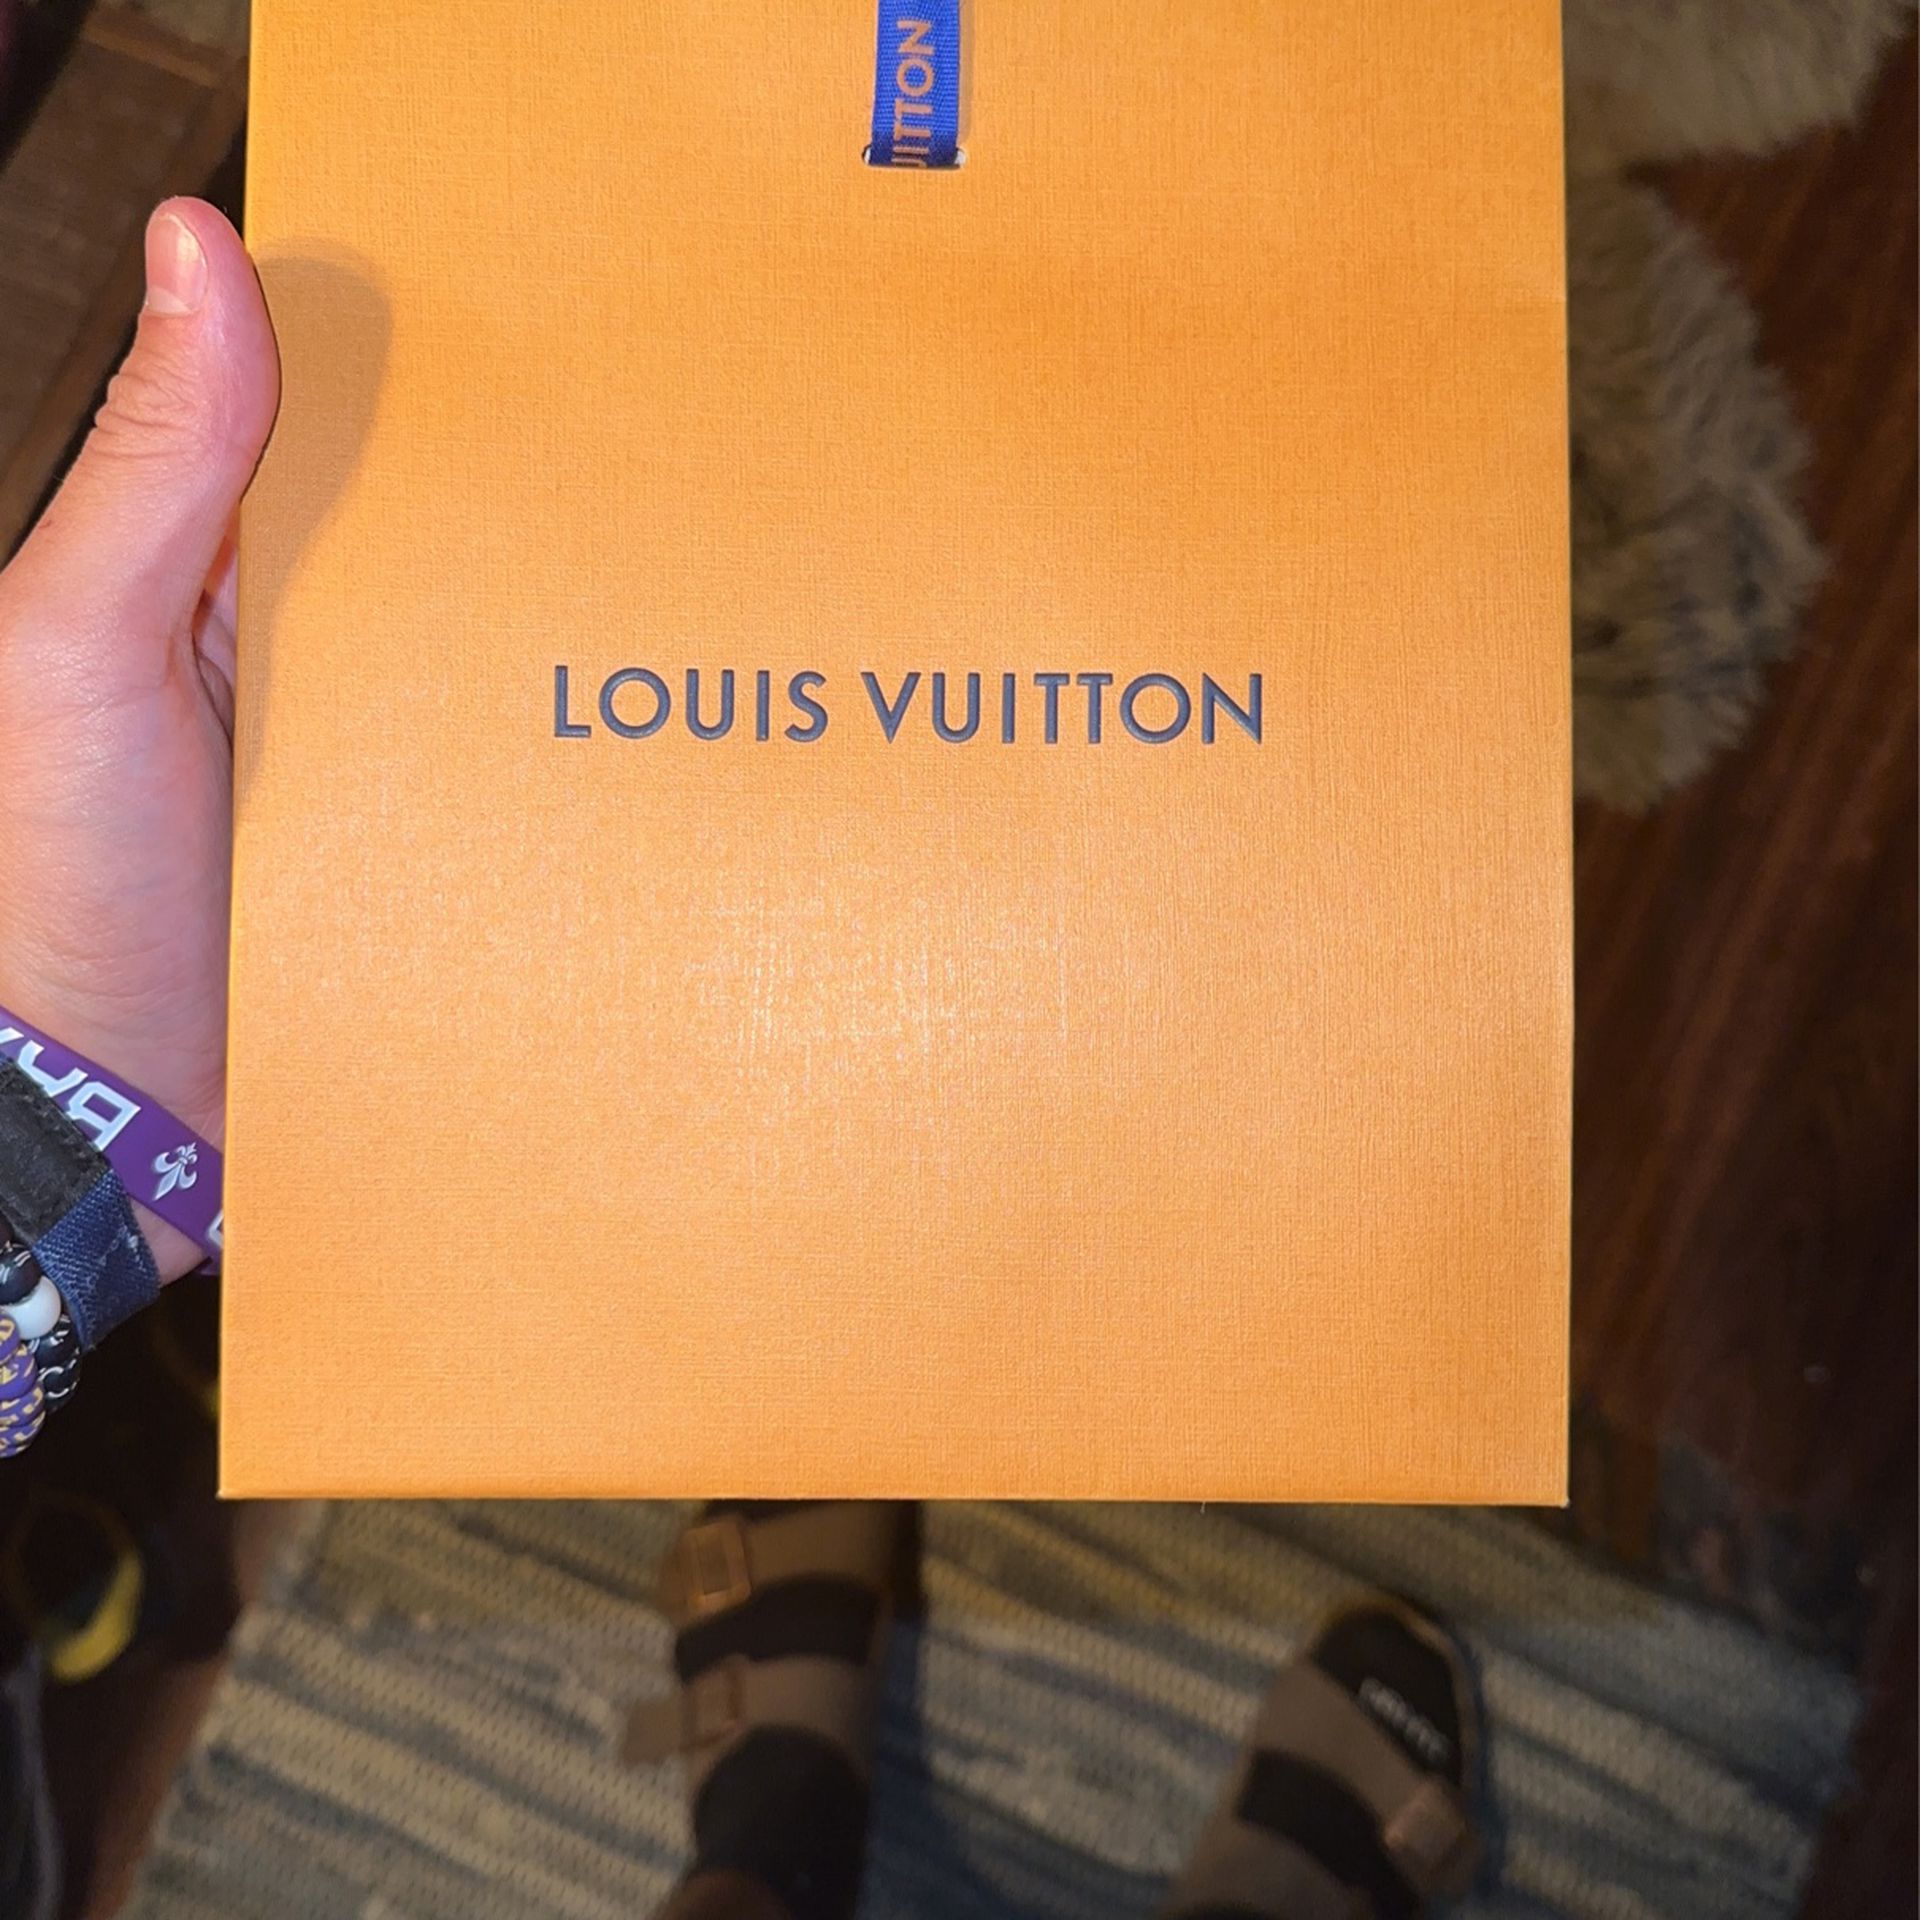 Louis Vuitton L'immensite Mens “CEO” Cologne for Sale in San Jose, CA -  OfferUp